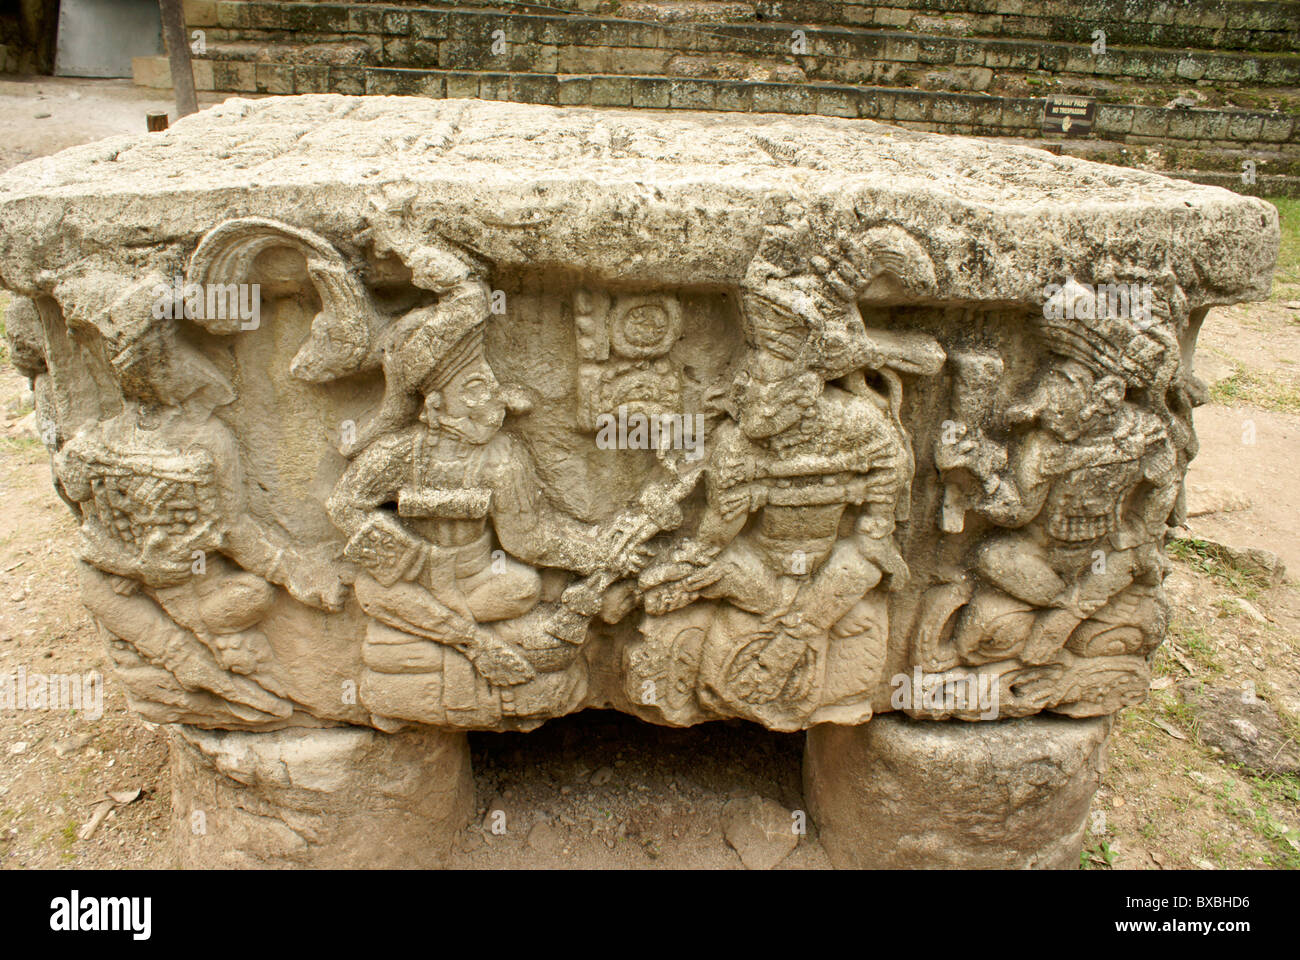 Altar Q showing the 16 rulers of the Mayan city of Copan, Copan ruins, Honduras Stock Photo